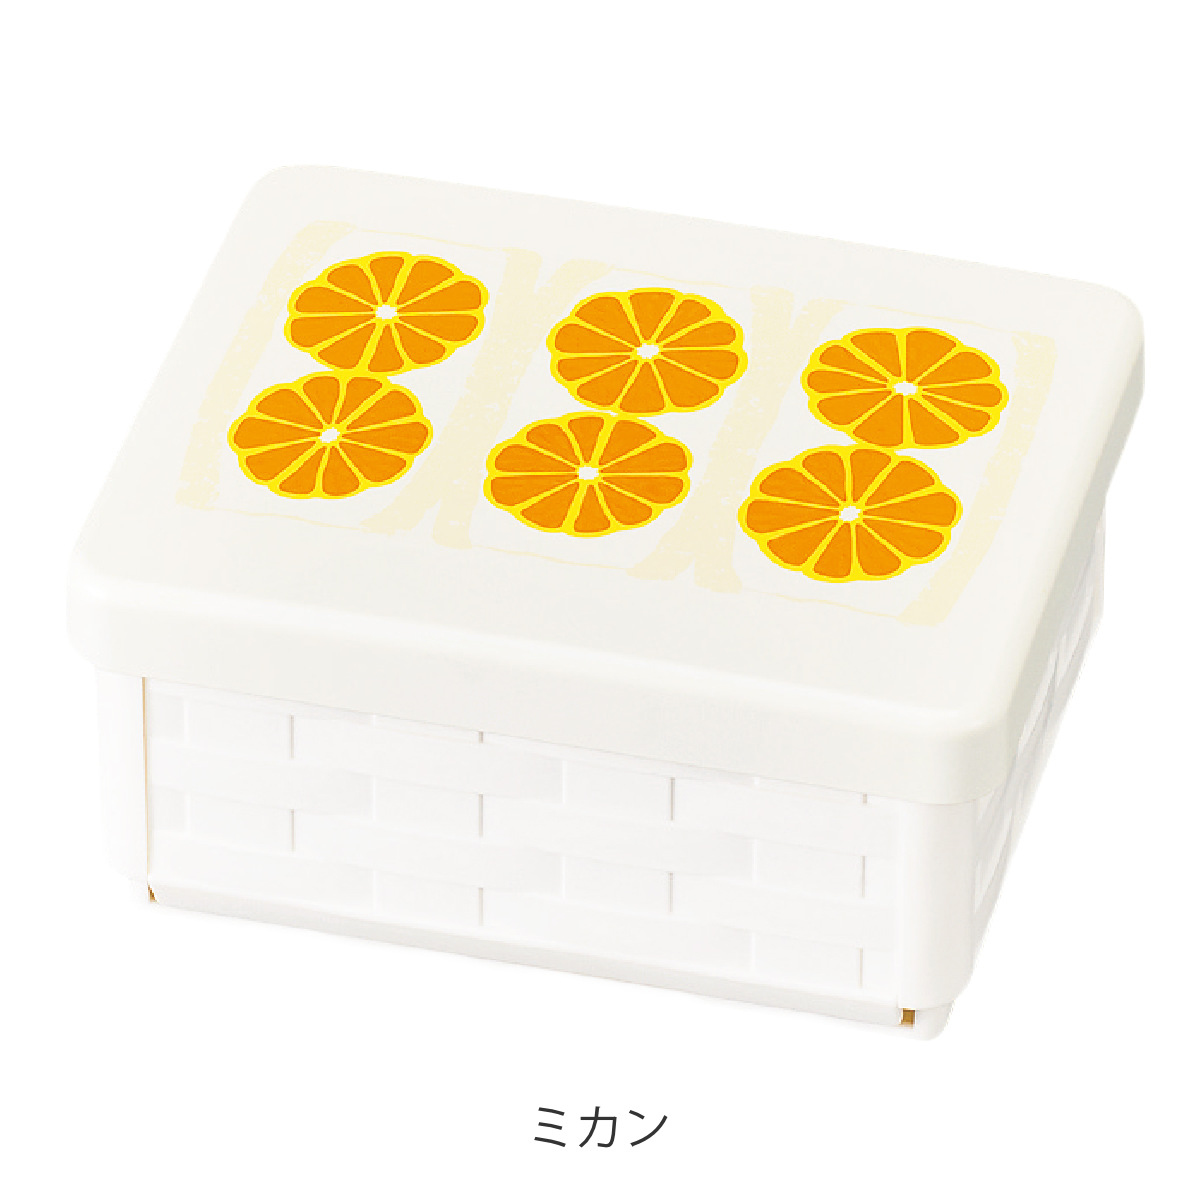  sandwich case Sand basket folding ( Sand wichi case . lunch box lunch box lunch box 1 step made in Japan )